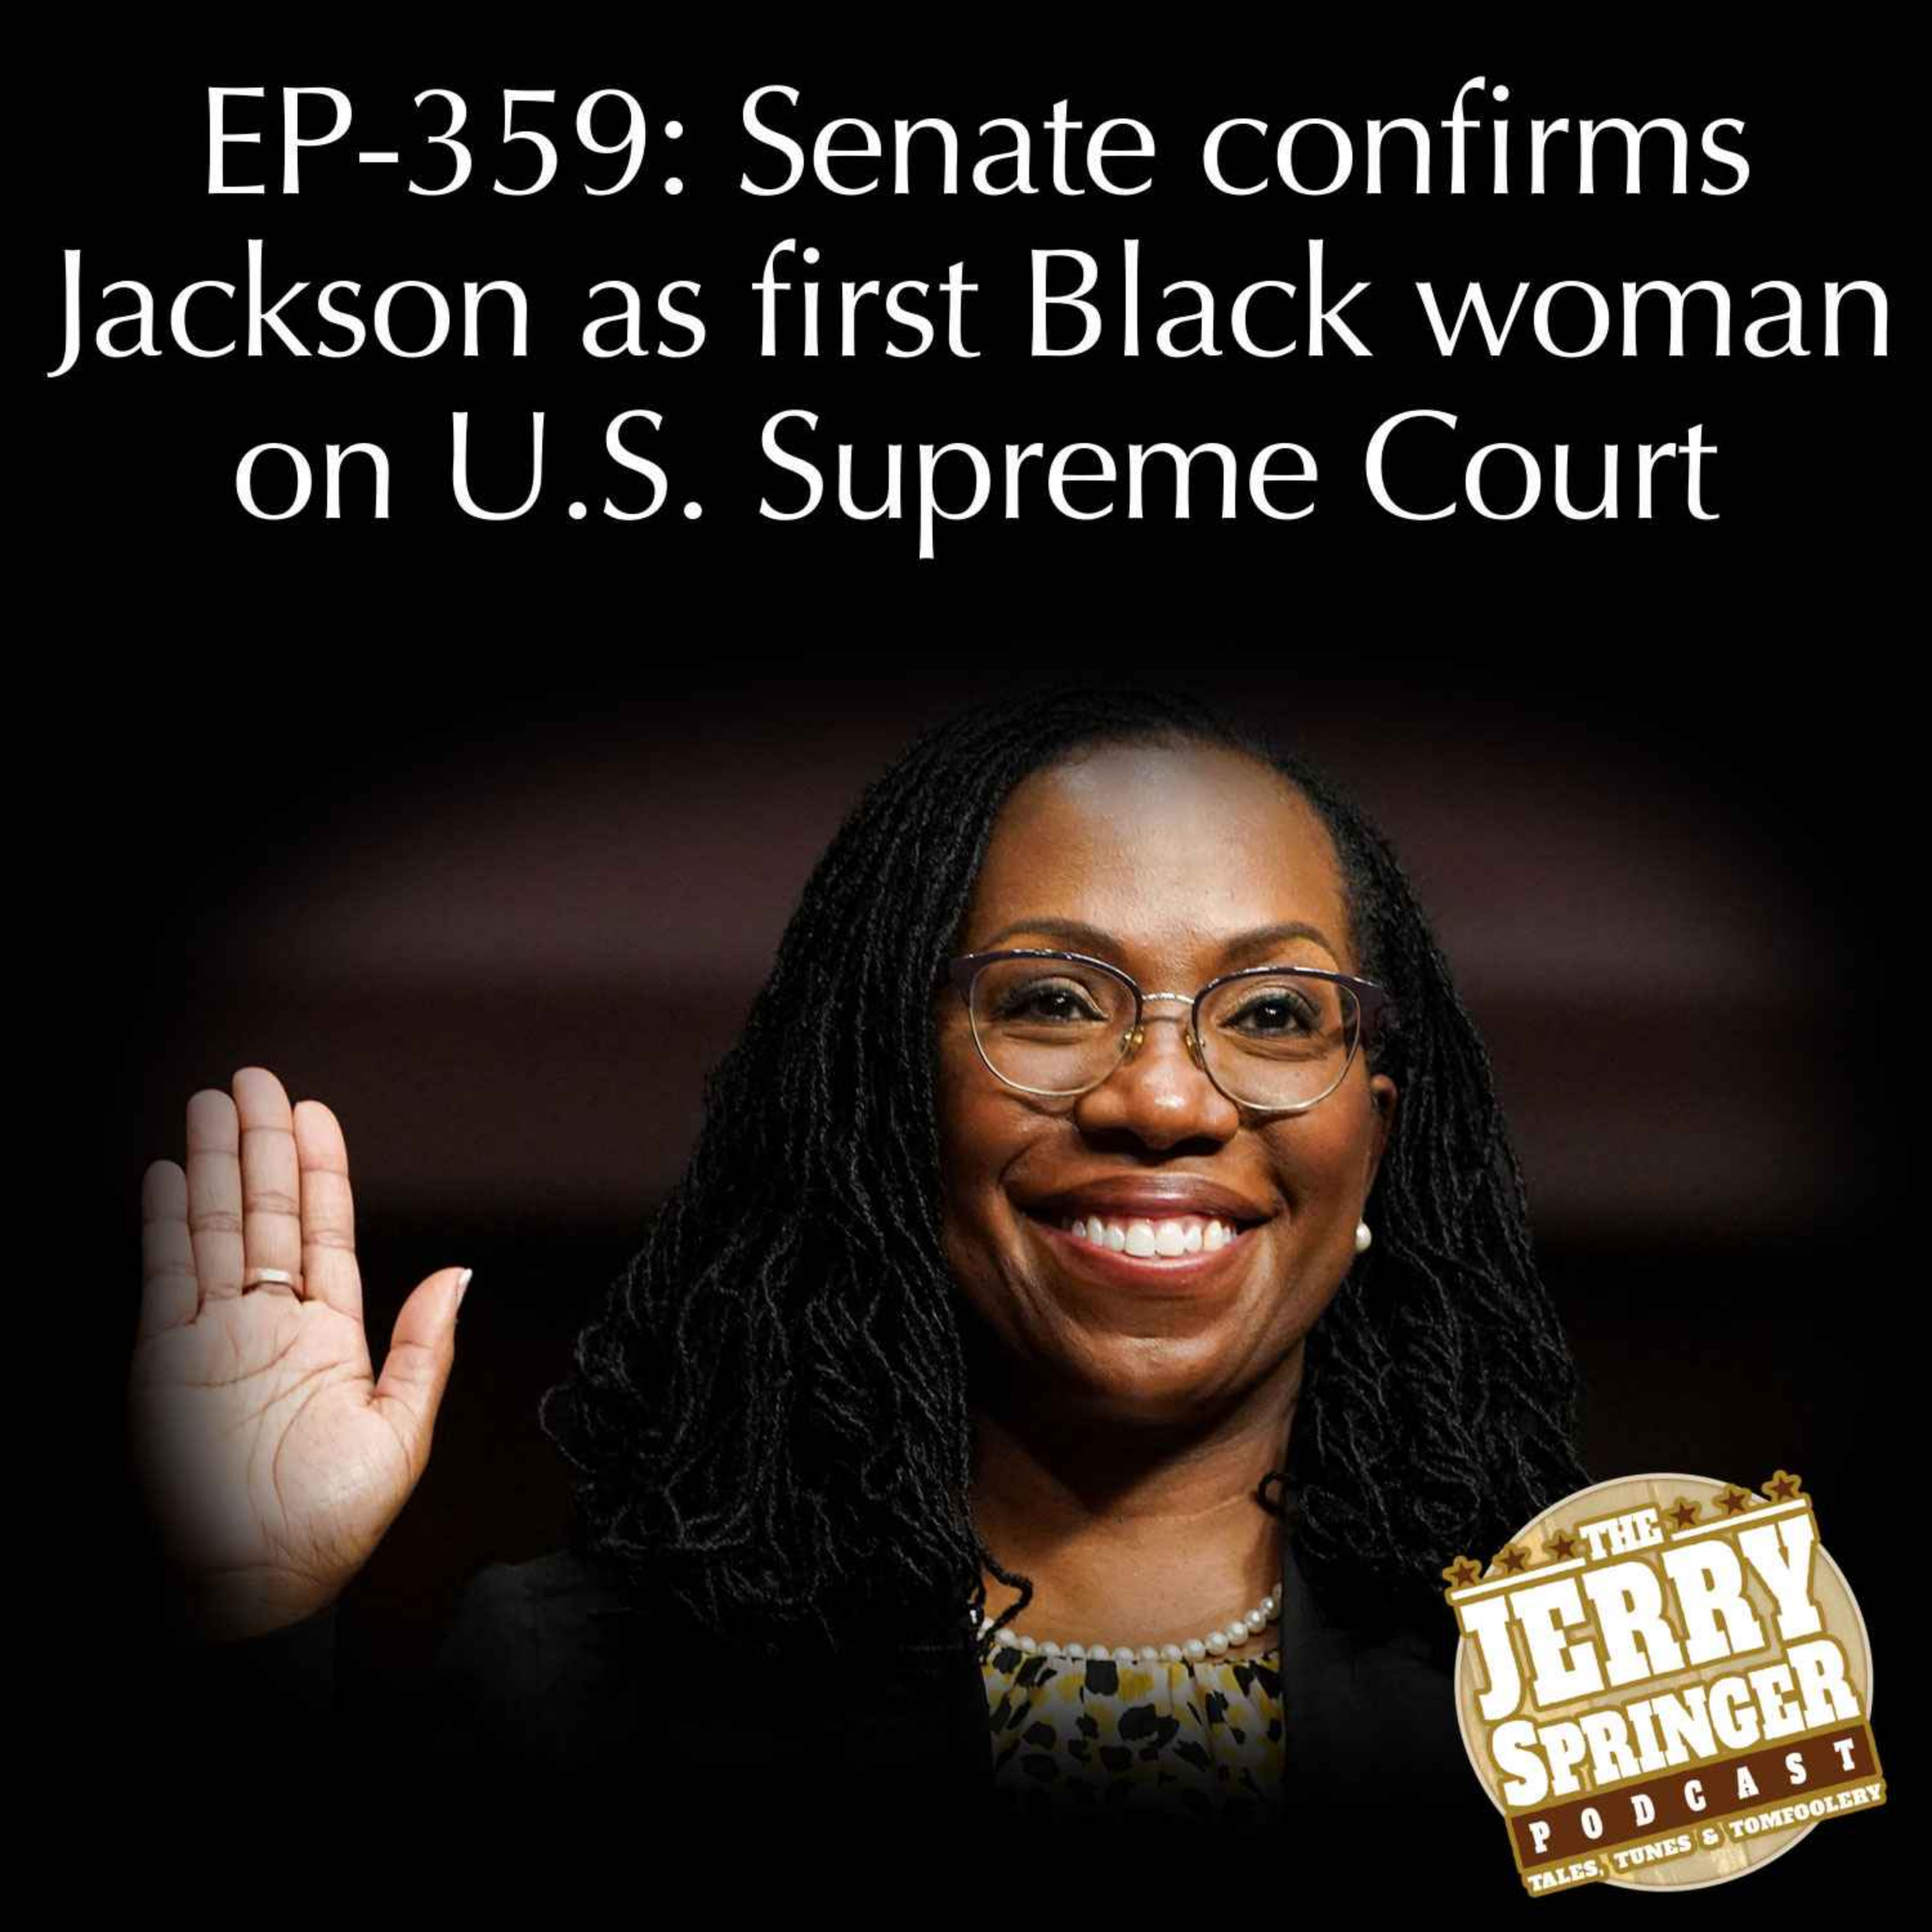 Senate confirms Jackson as first Black woman on U.S. Supreme Court: EP - 359